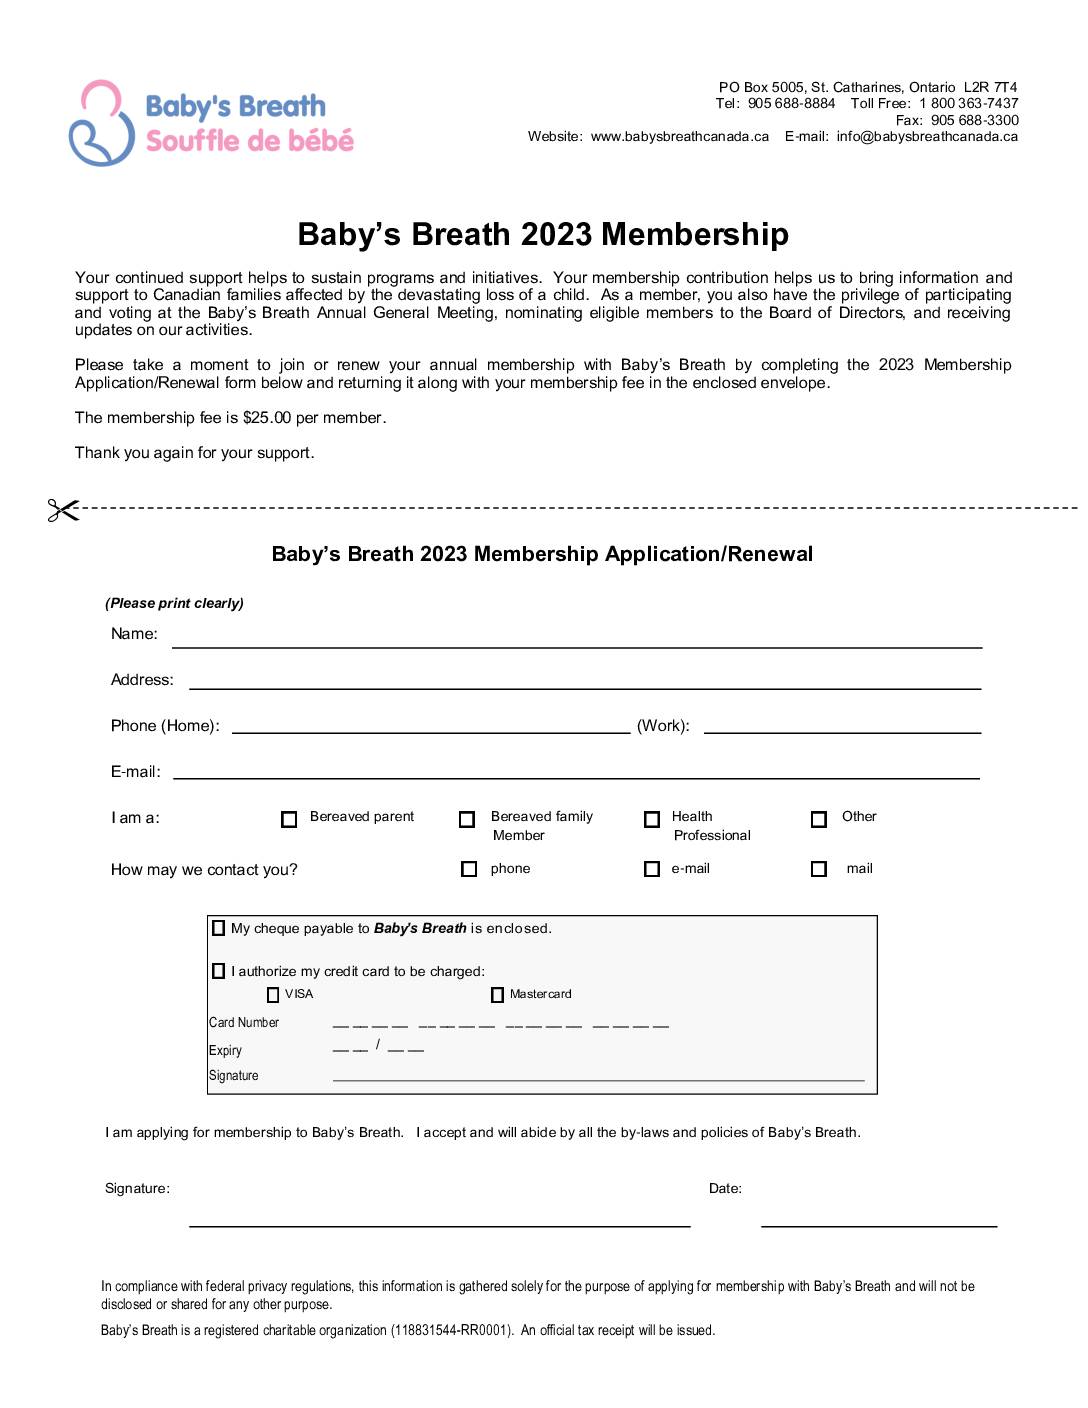 Baby’s Breath Membership Form- 2023